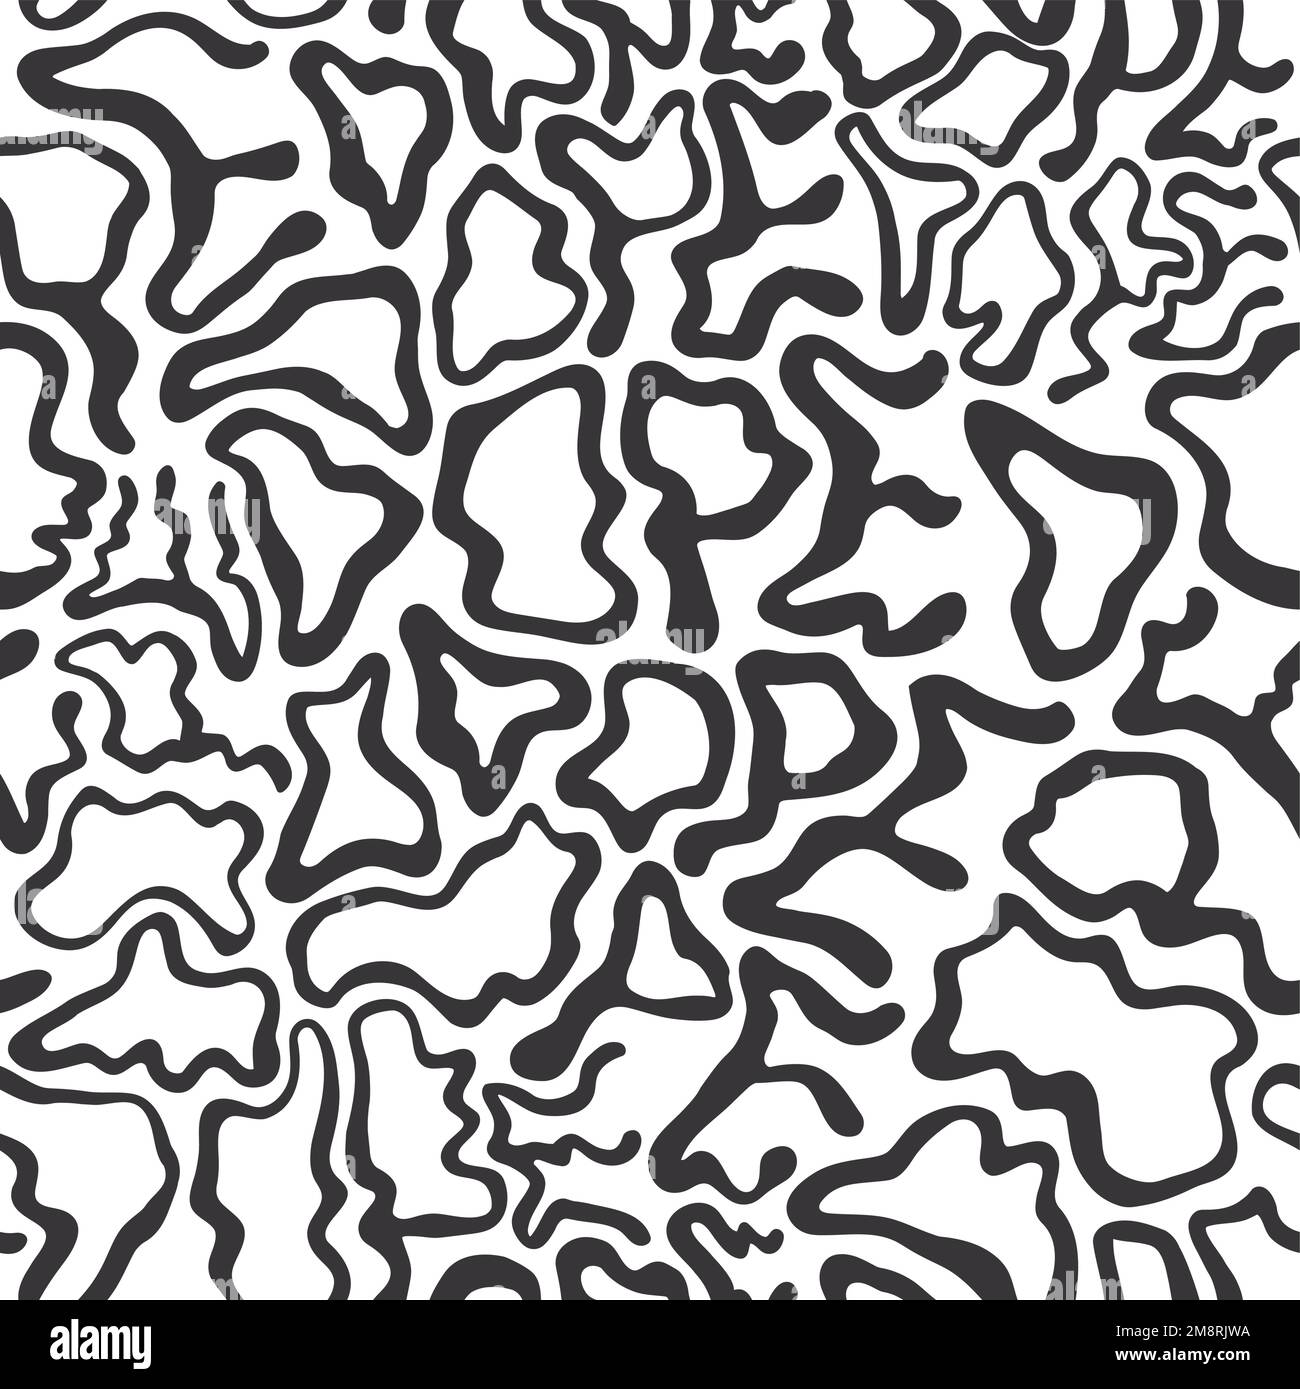 Deformiertes, wellenförmiges Dope-Wort, nahtlose Muster-Tapete, Vektorgrafik-Illustration, trippige Beschriftung, Dope-Nahtloses Muster-Tapeten-Druckkonzept Stock Vektor